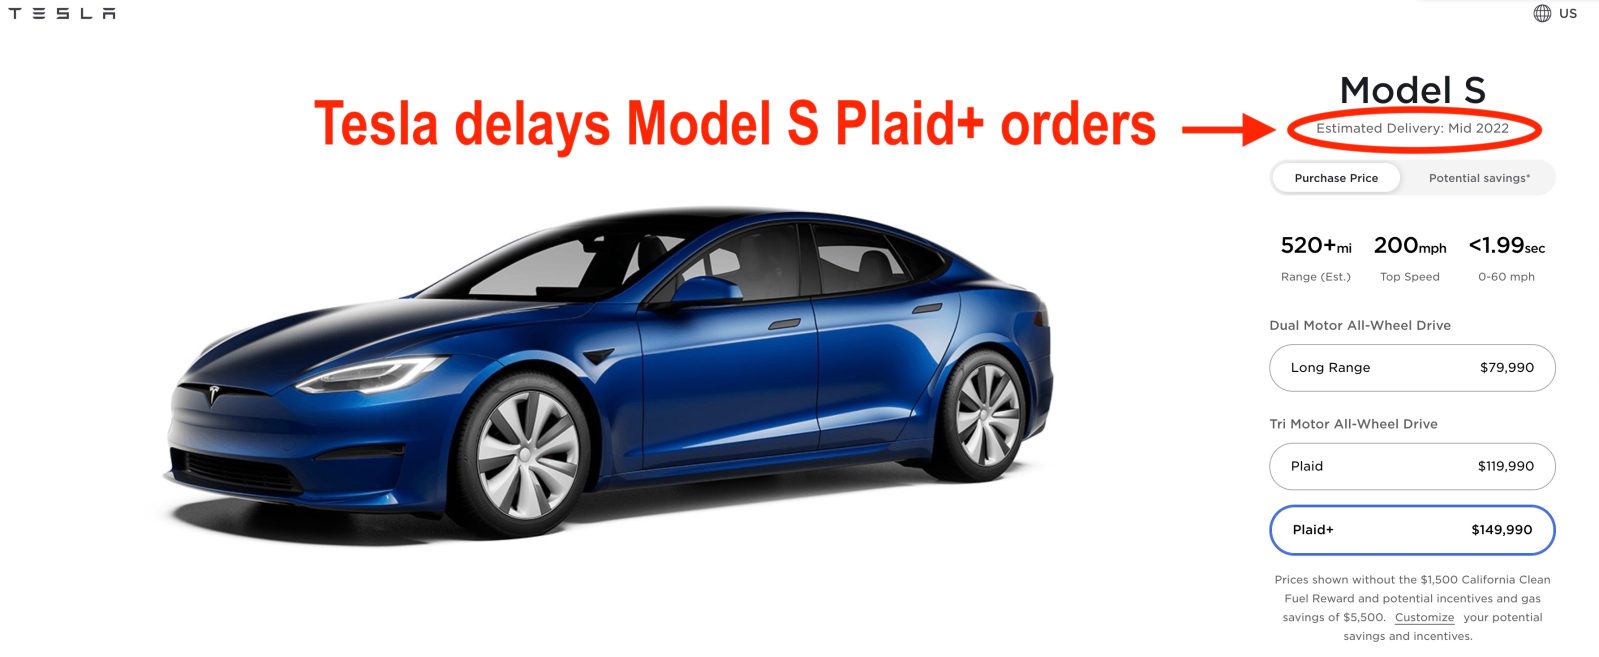 Tesla delays new Model S Plaid Plus orders to 'mid-2022